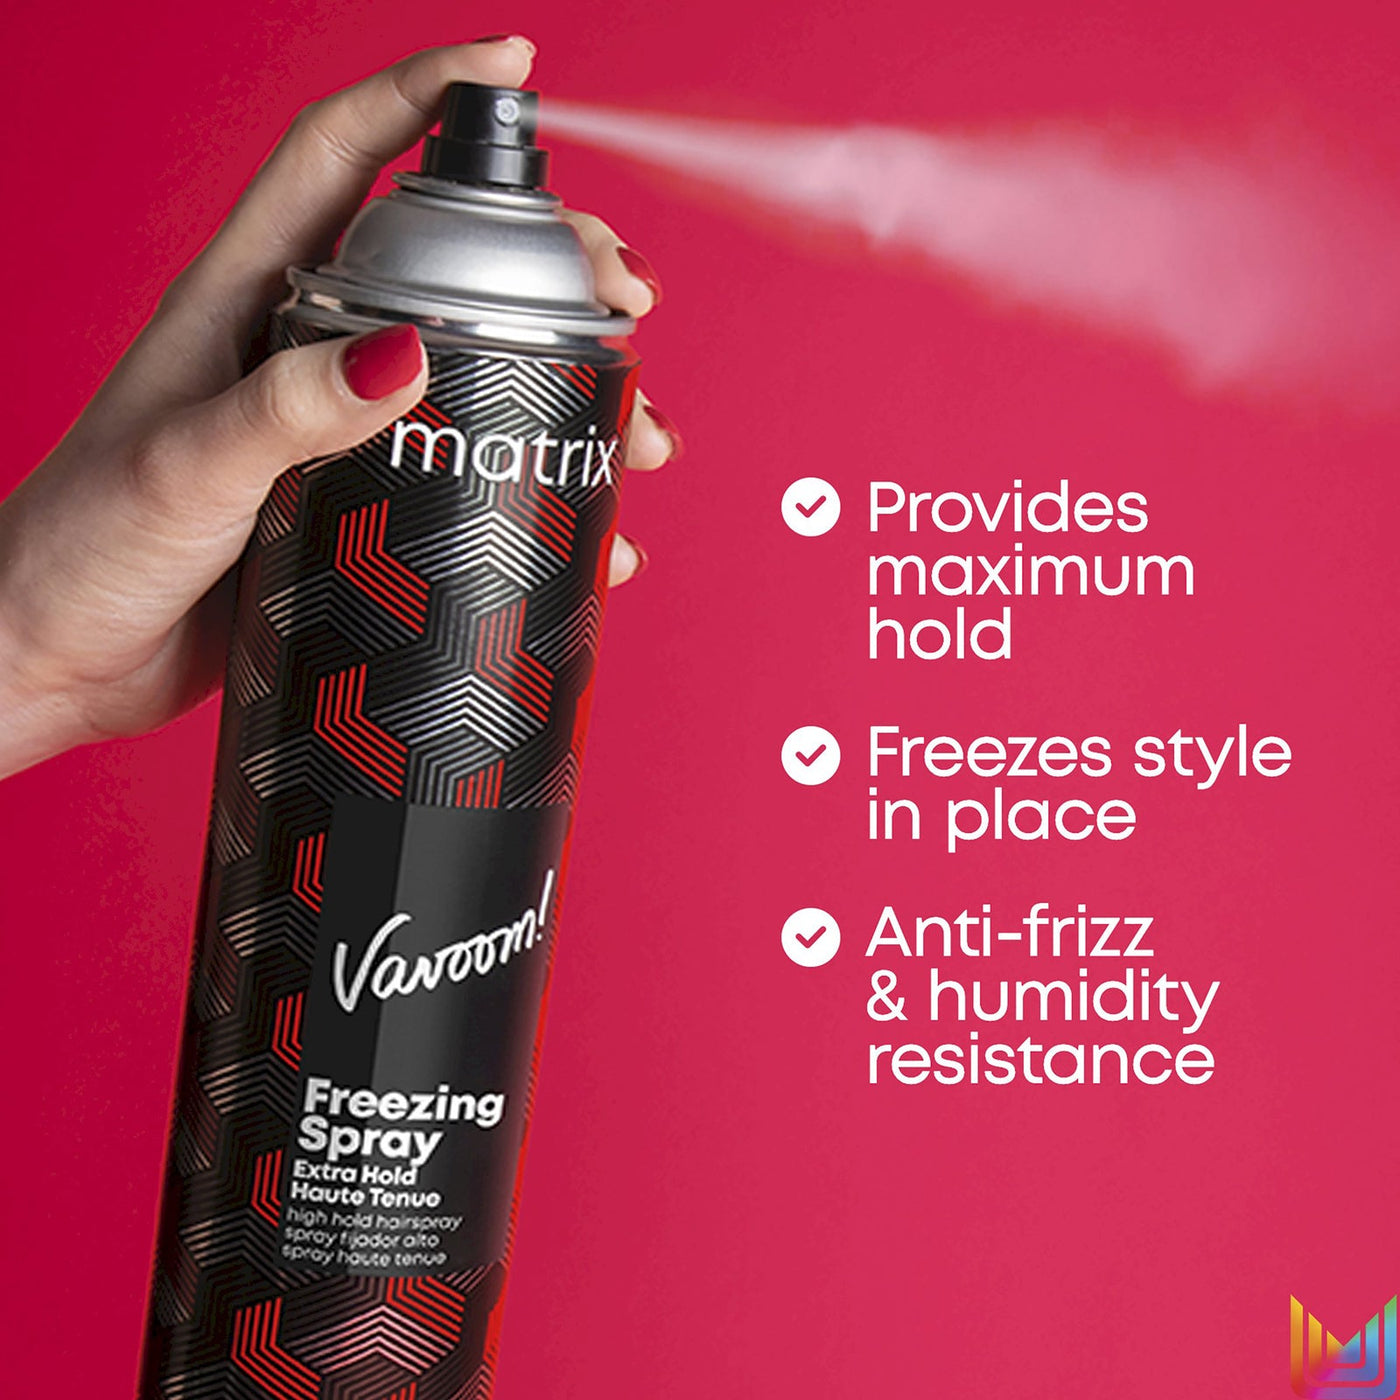 Matrix Vavoom Freezing Spray Extra Hold (426g) features